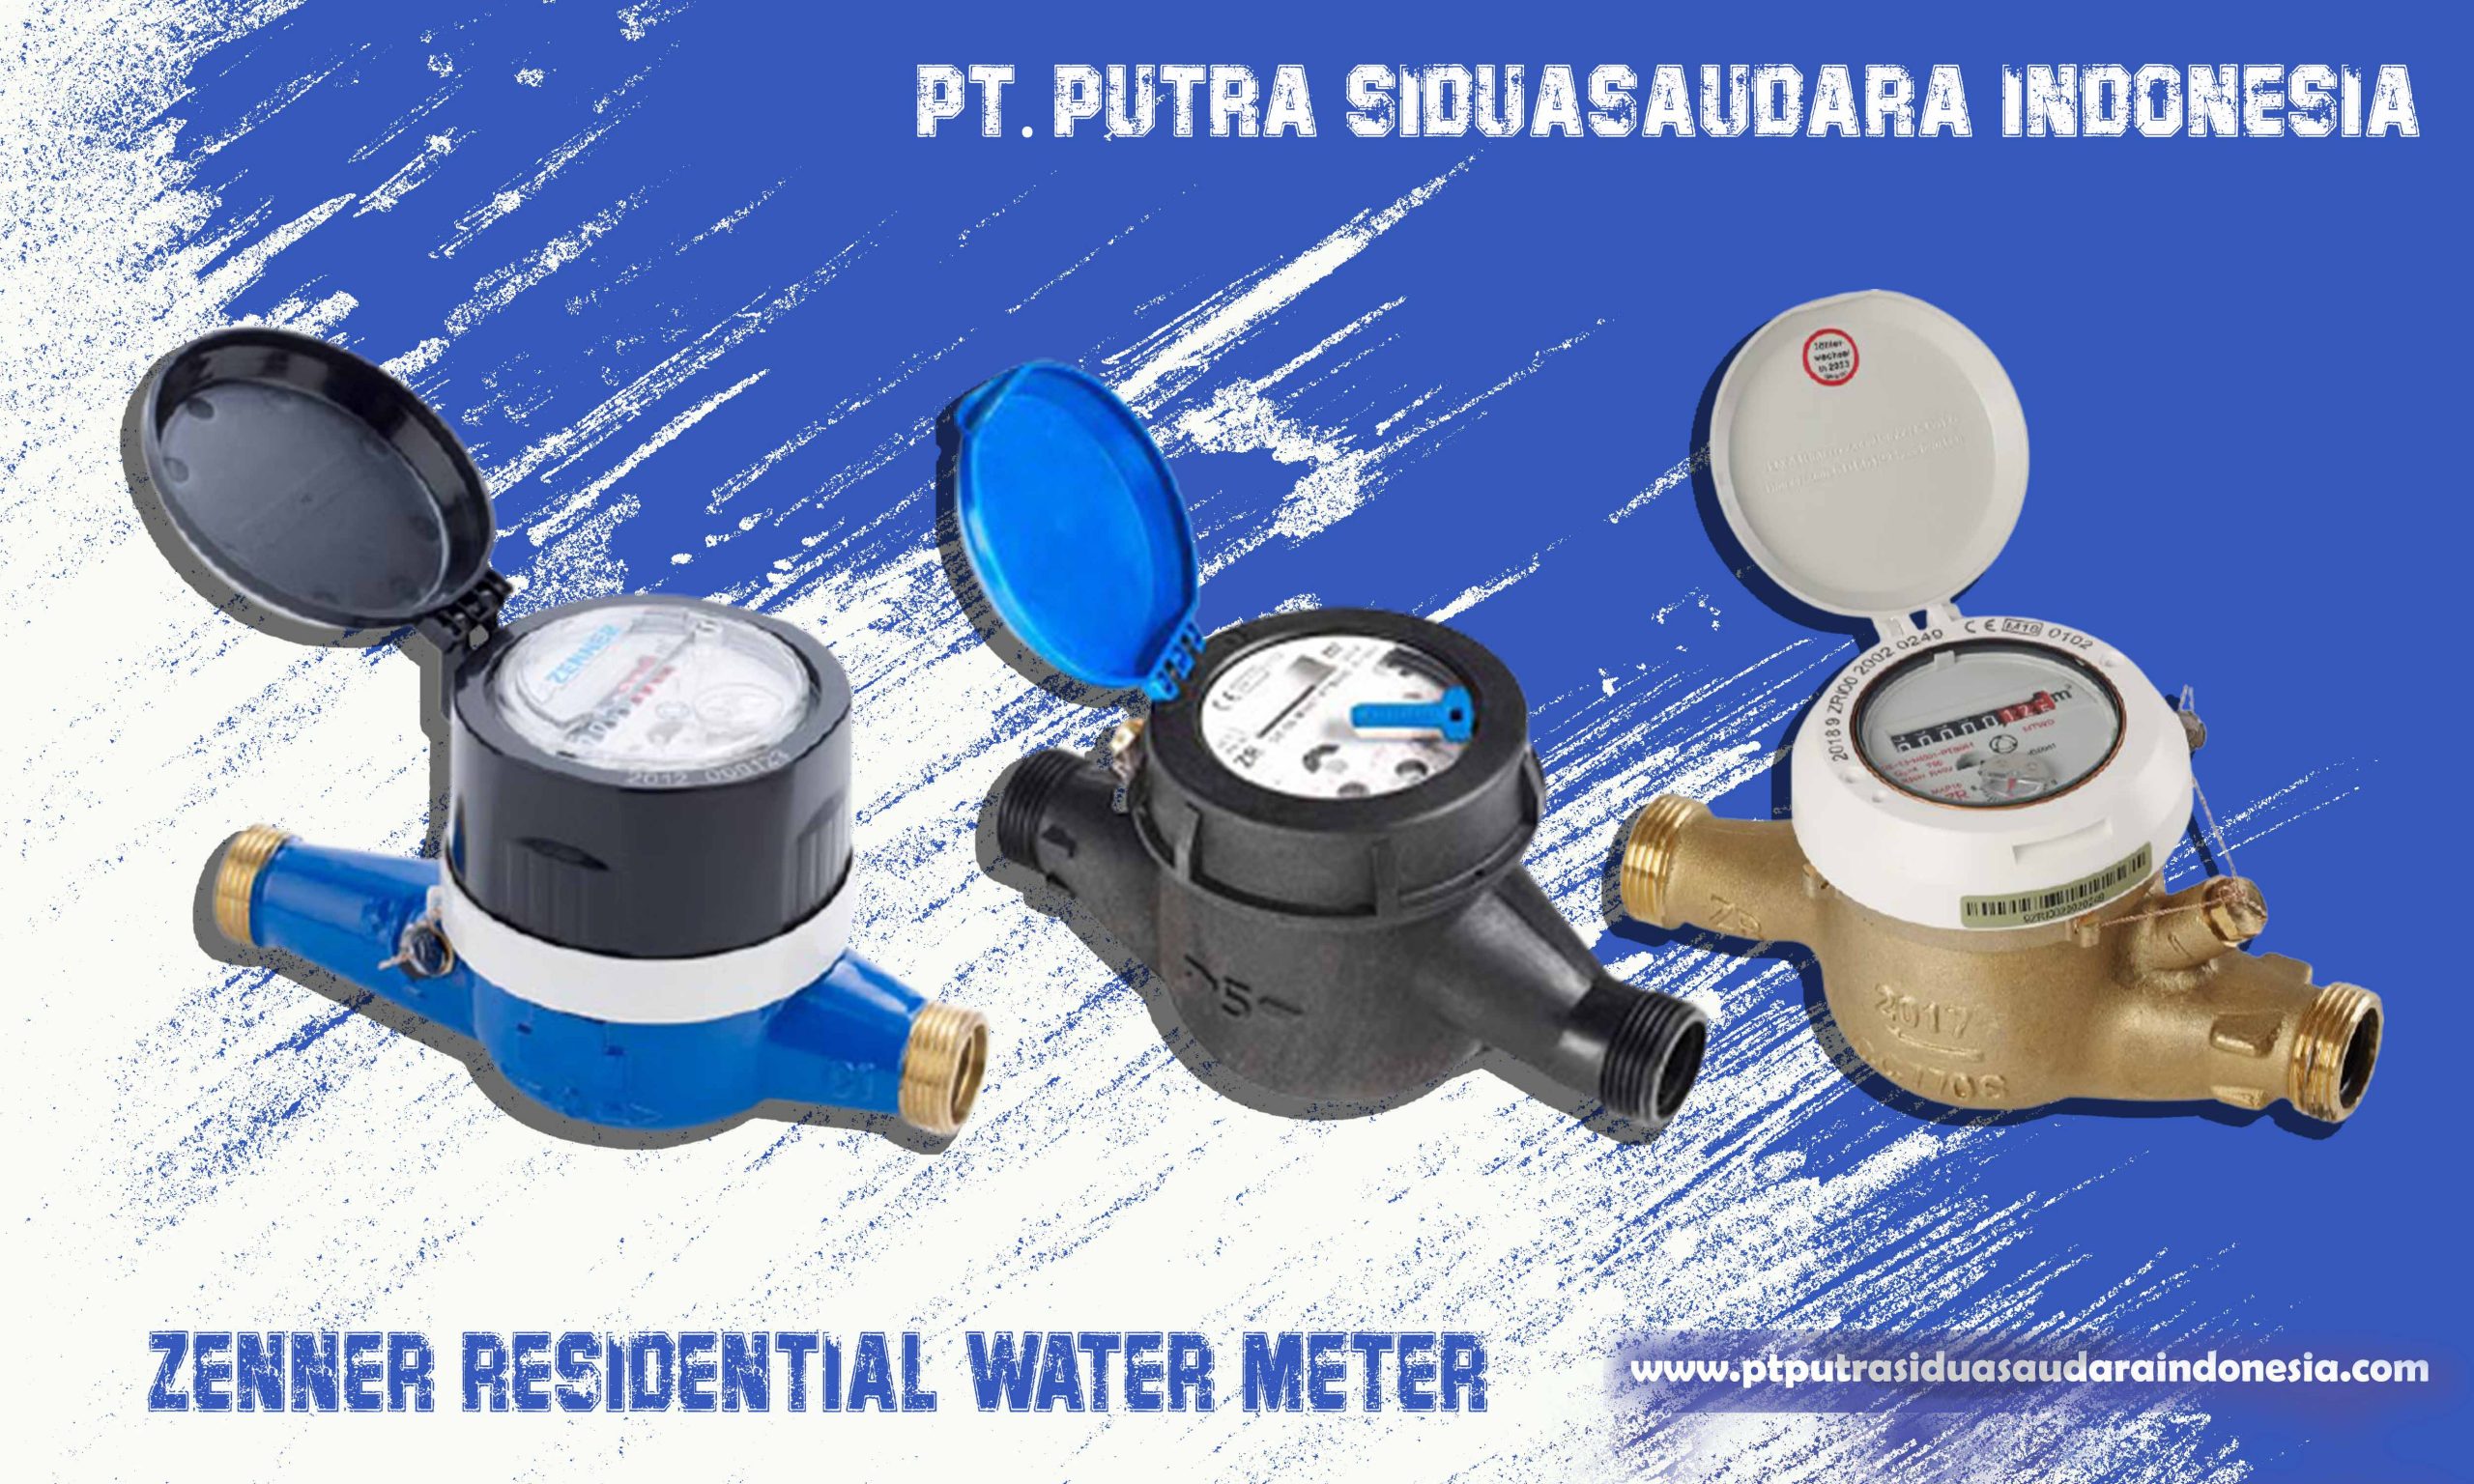 Water-meter-Categori-product-Zenner-Residential